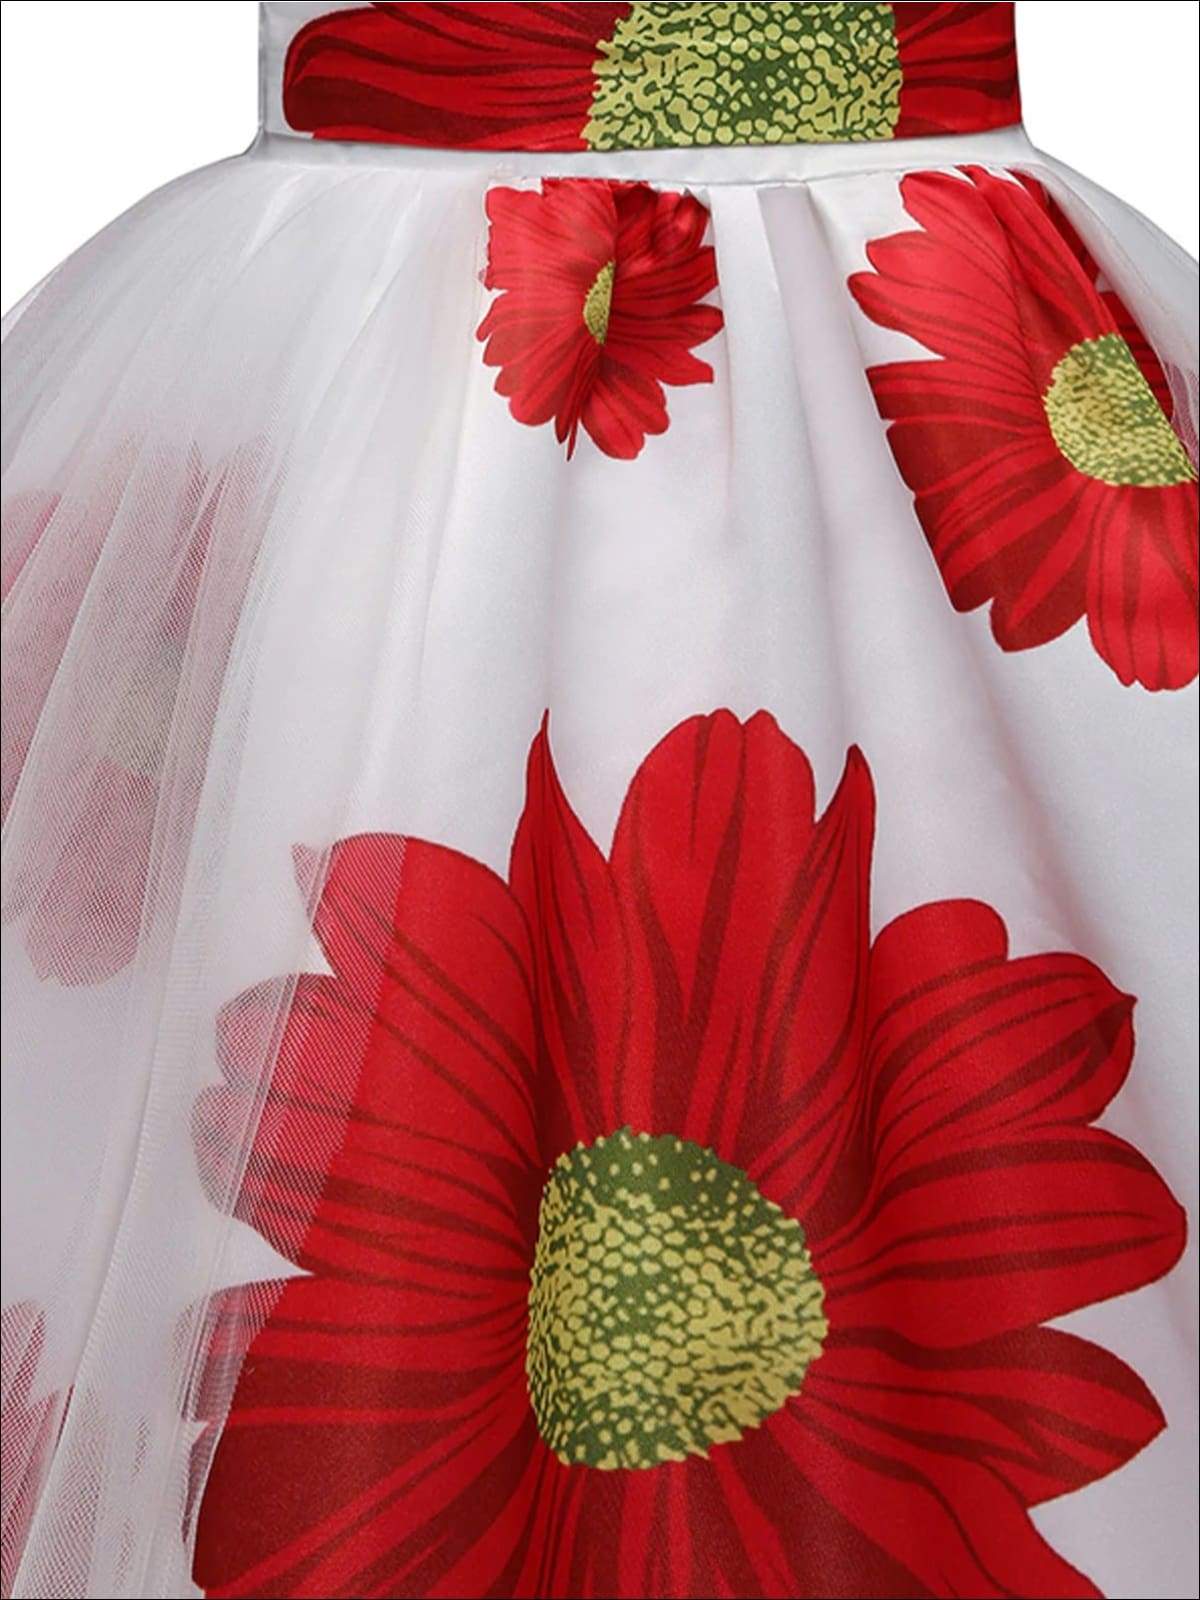 Girls Sleeveless Floral Print Floor Length Special Occasion Dress - Girls Spring Dressy Dress